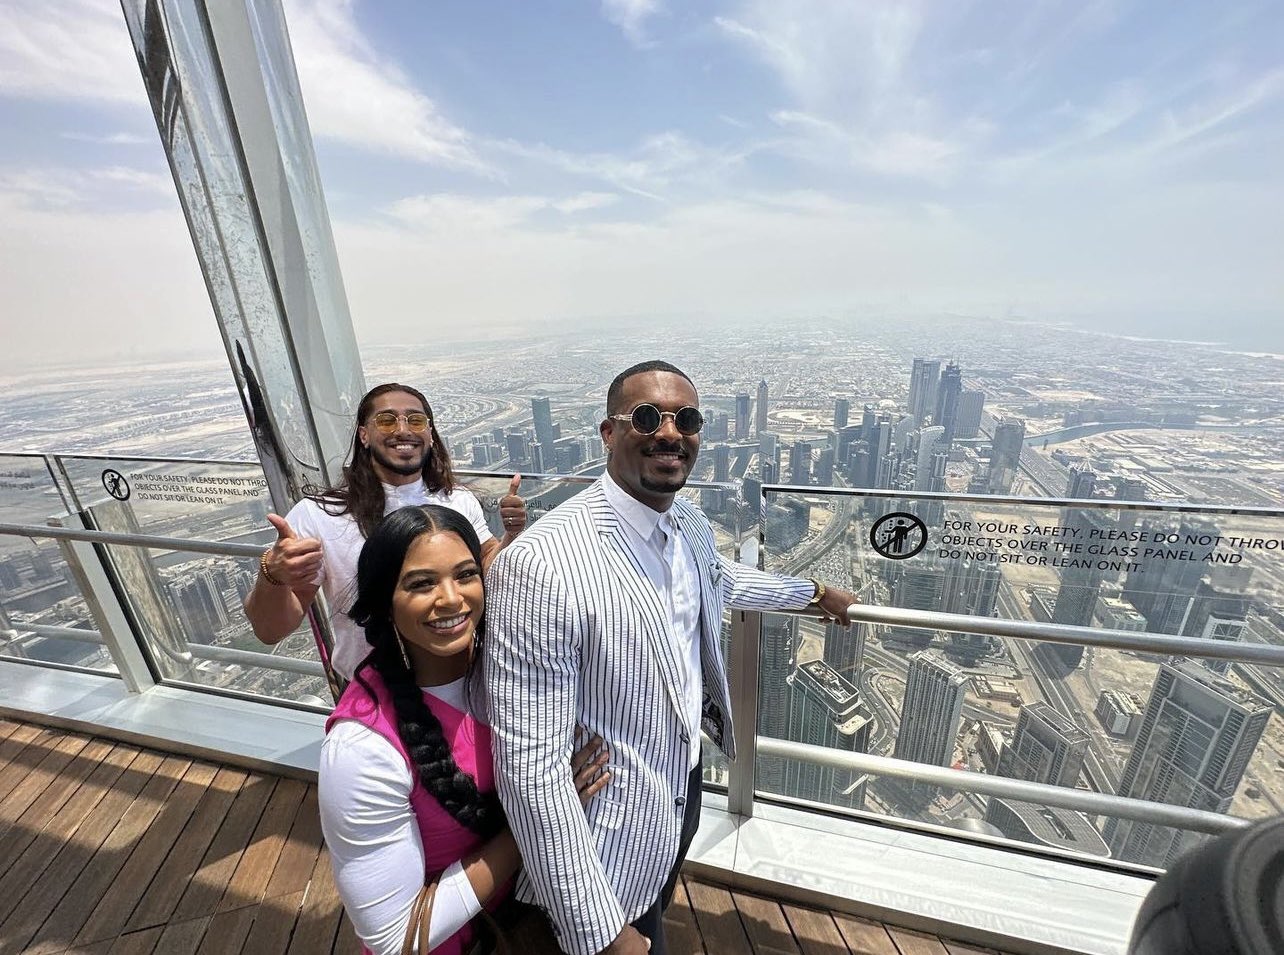 Bianca Belair Twitter: "Burj Khalifa! On top Dubai! @MontezFordWWE @AliWWE #WWENOC https://t.co/zj7BcZwK8y" / X